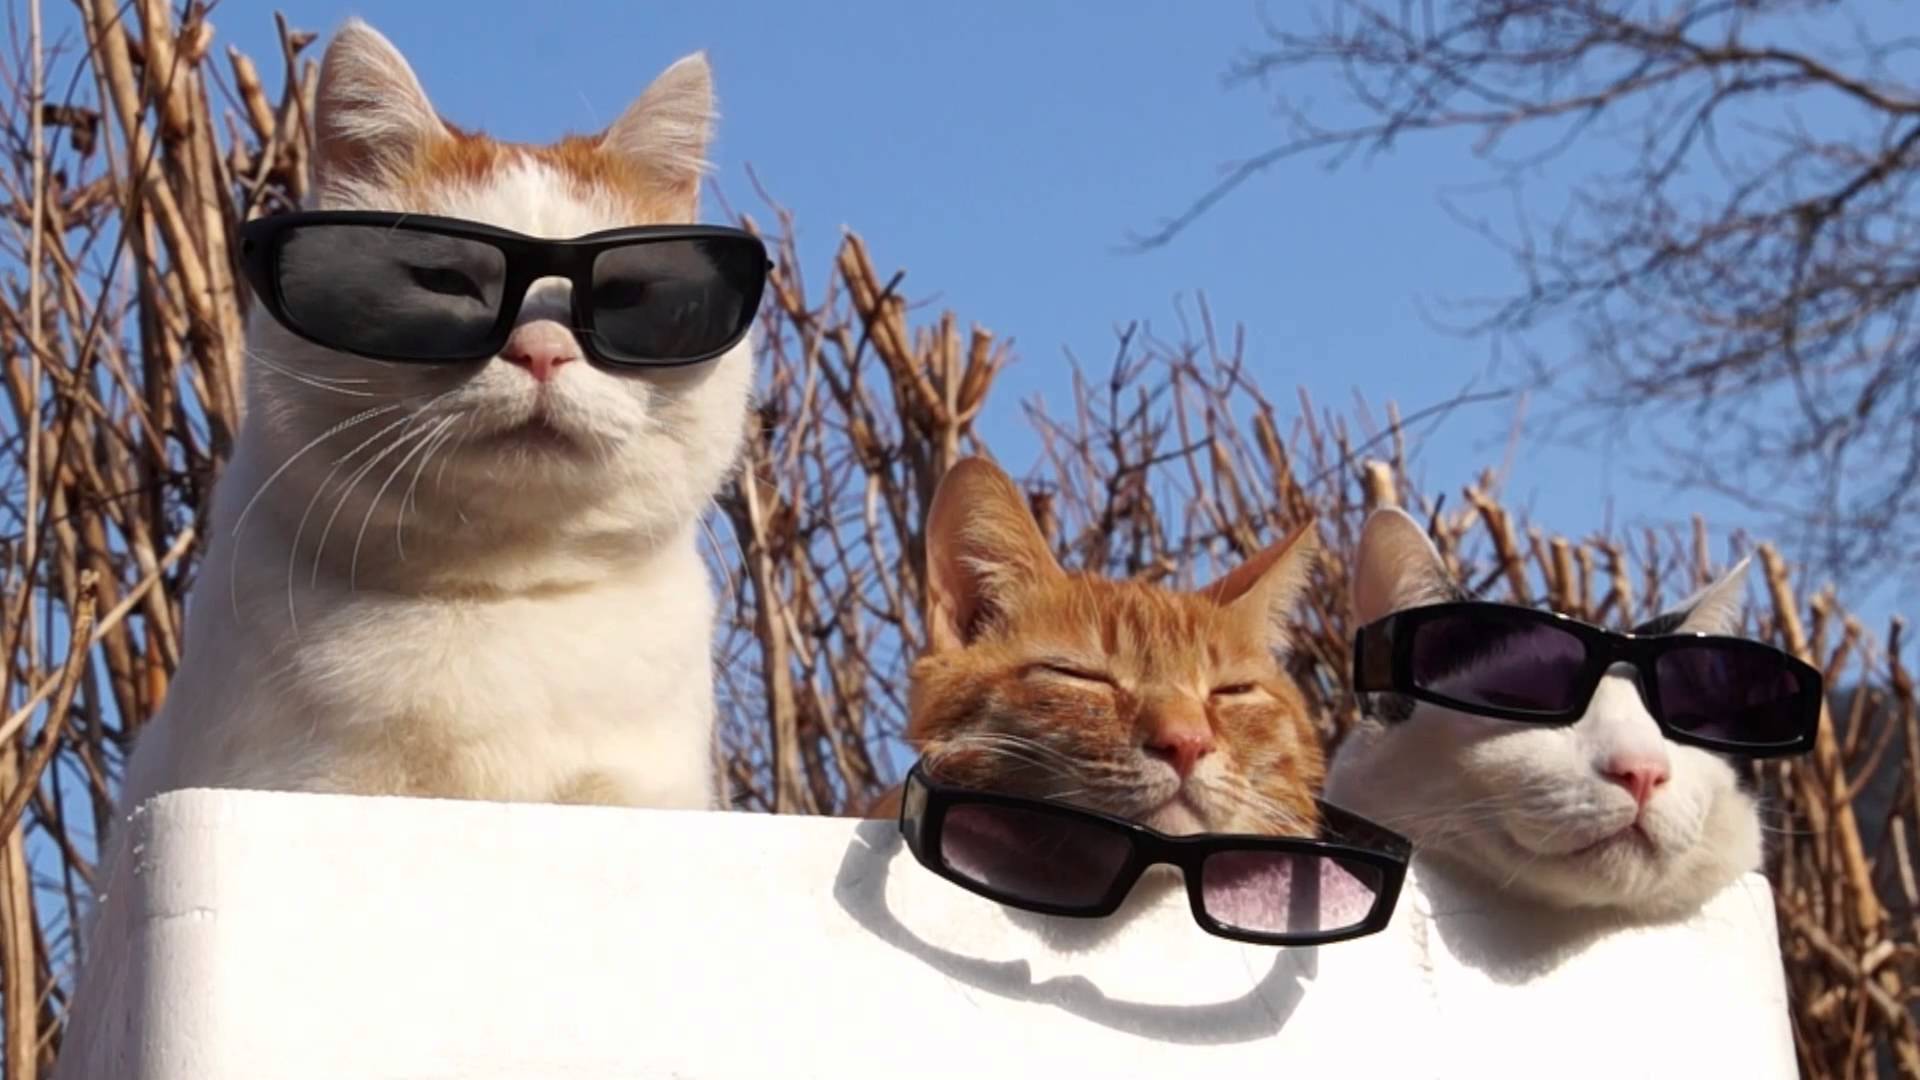 Cat With Sunglasses Wallpaper. (54++ Wallpaper)